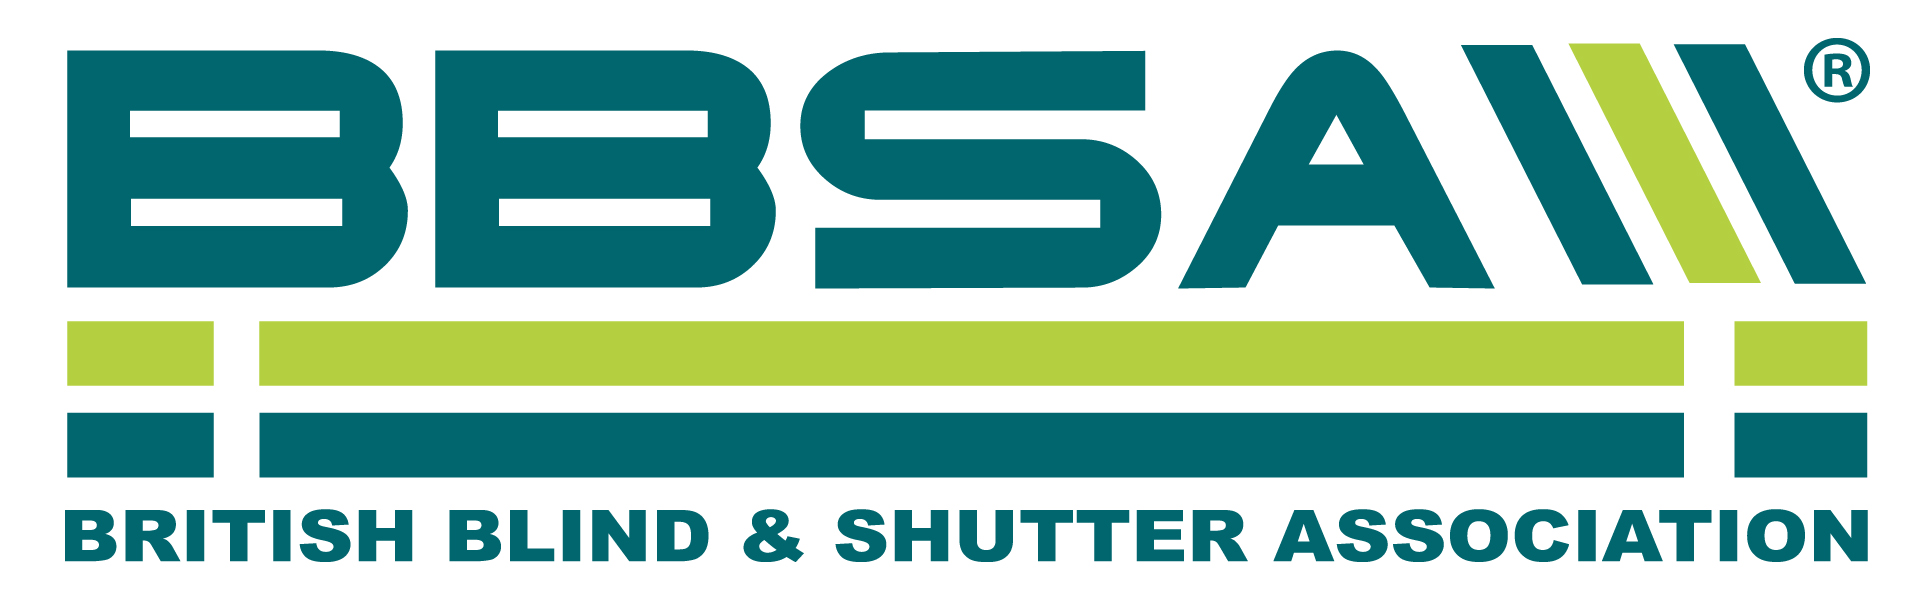 BBSA-Logo